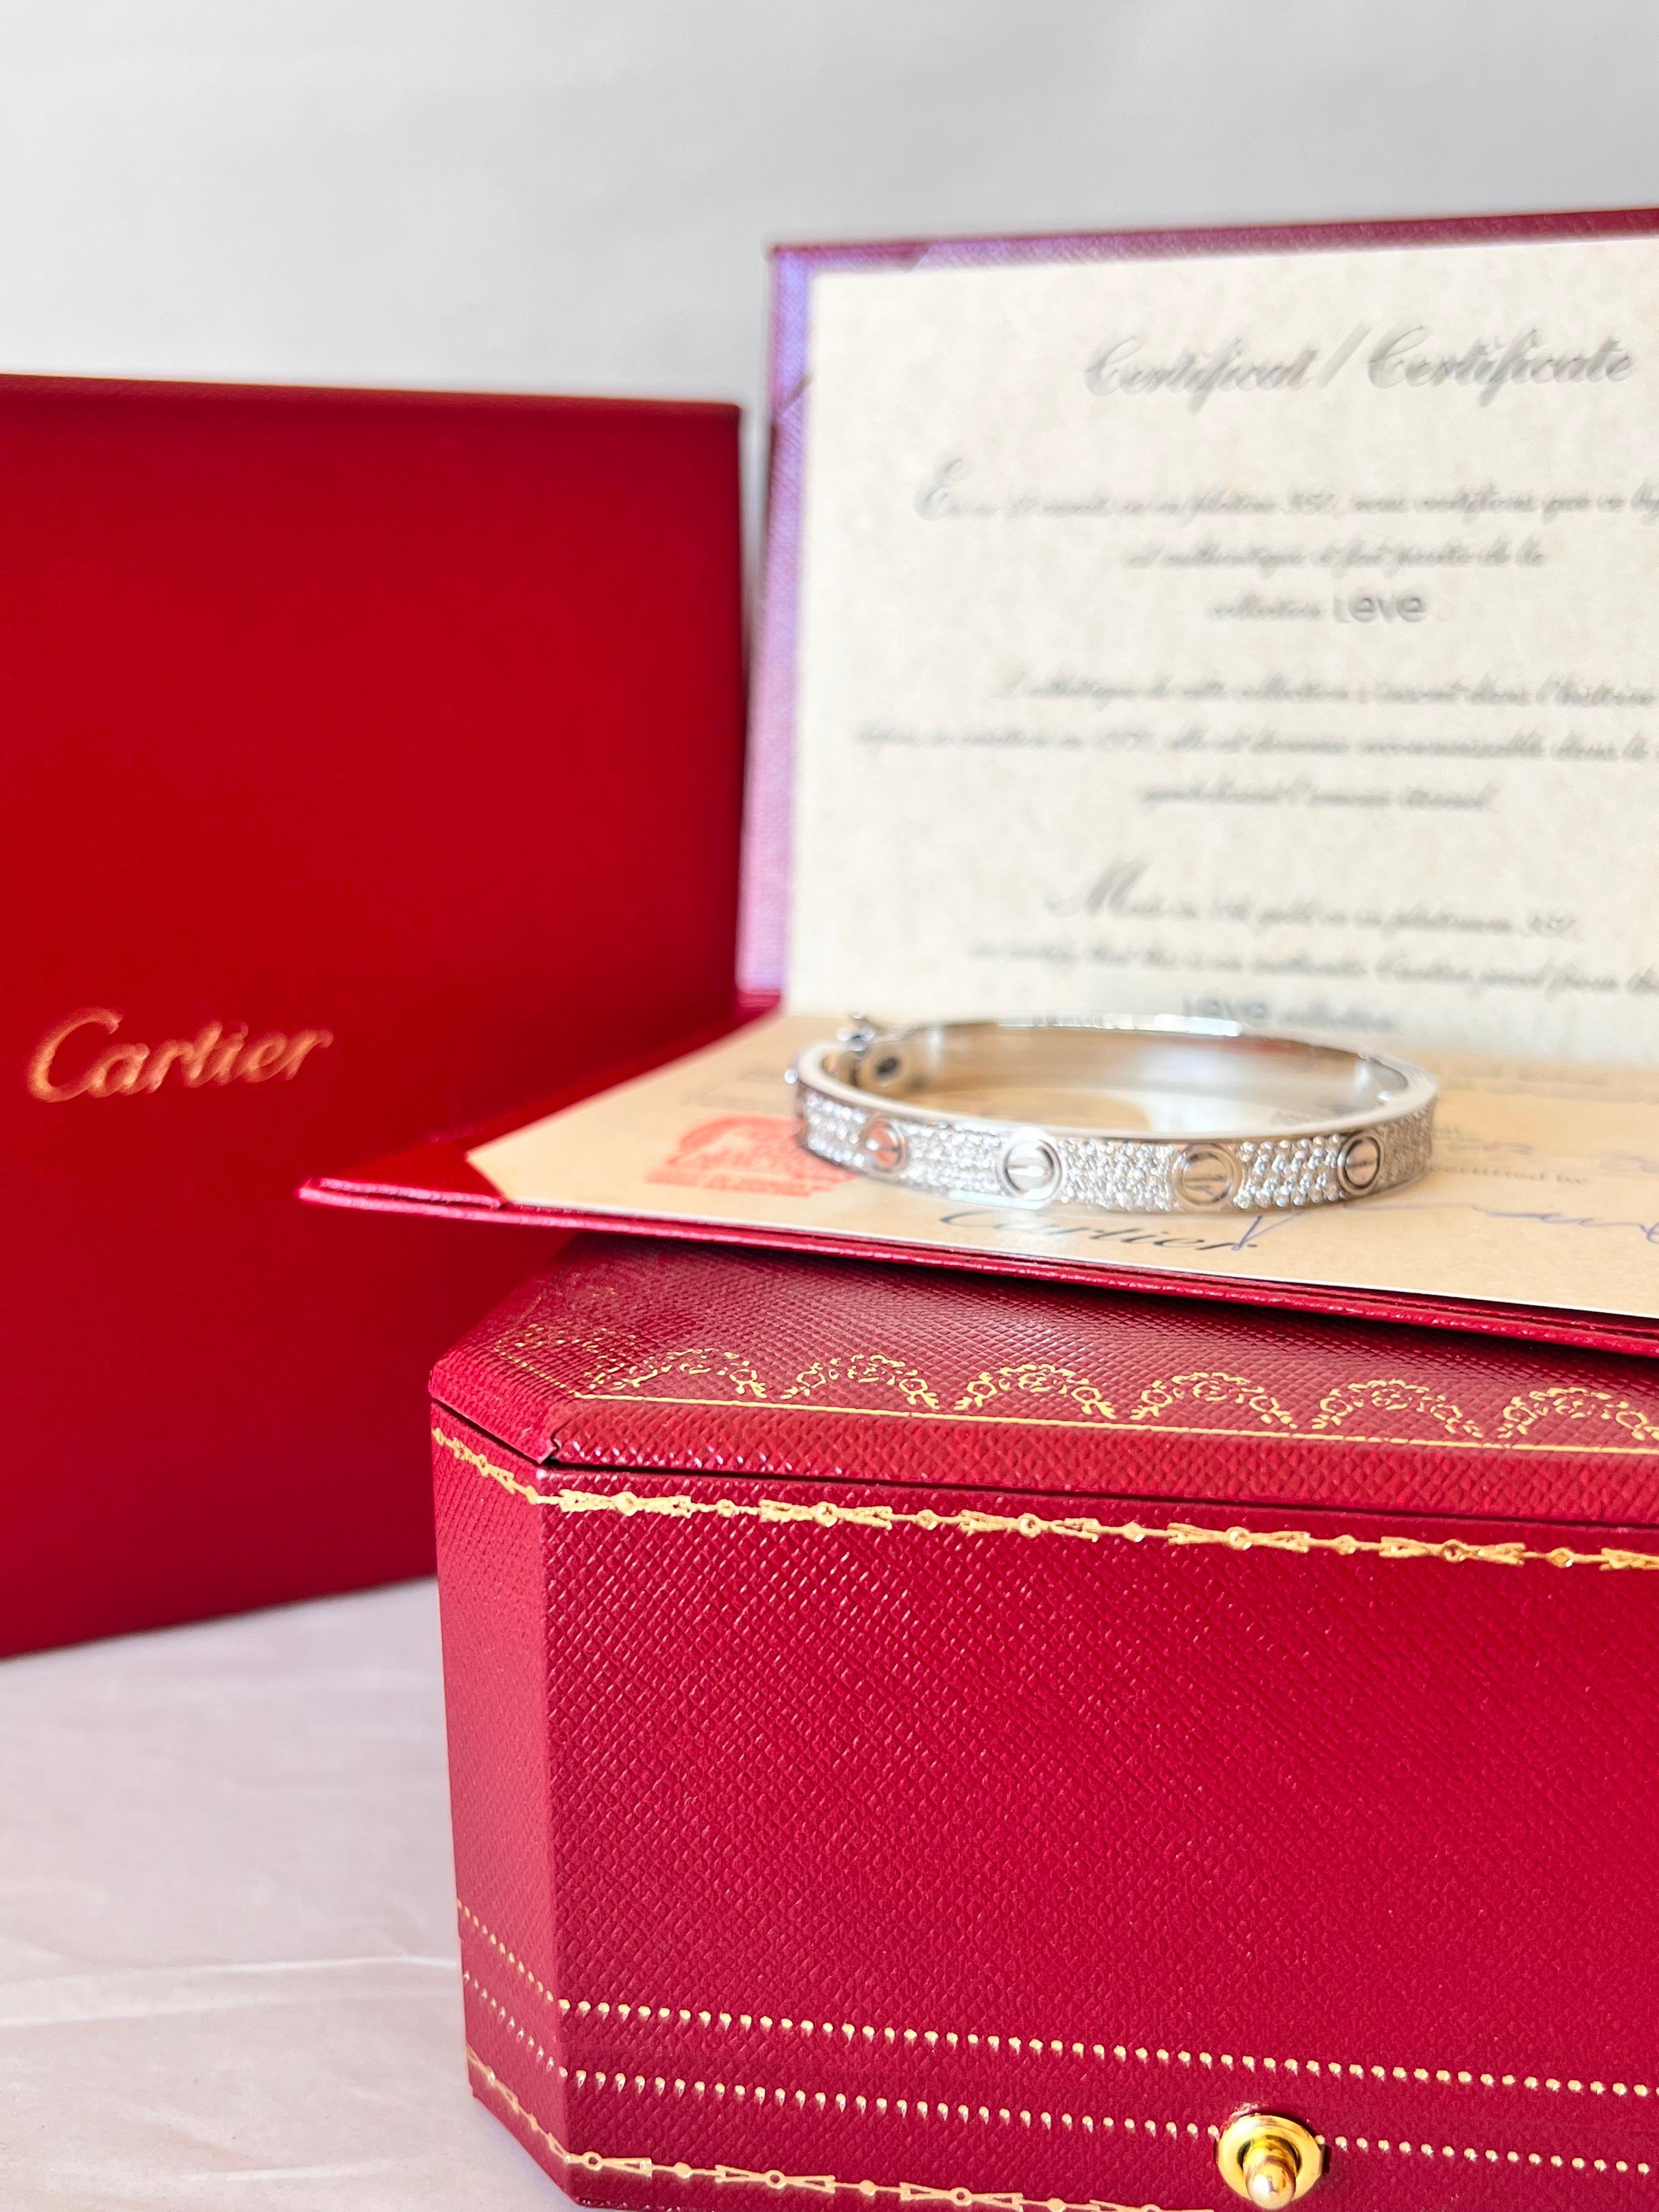 Brilliant Cut Cartier LOVE Bracelet in 18k white gold 2ct diamonds with box For Sale